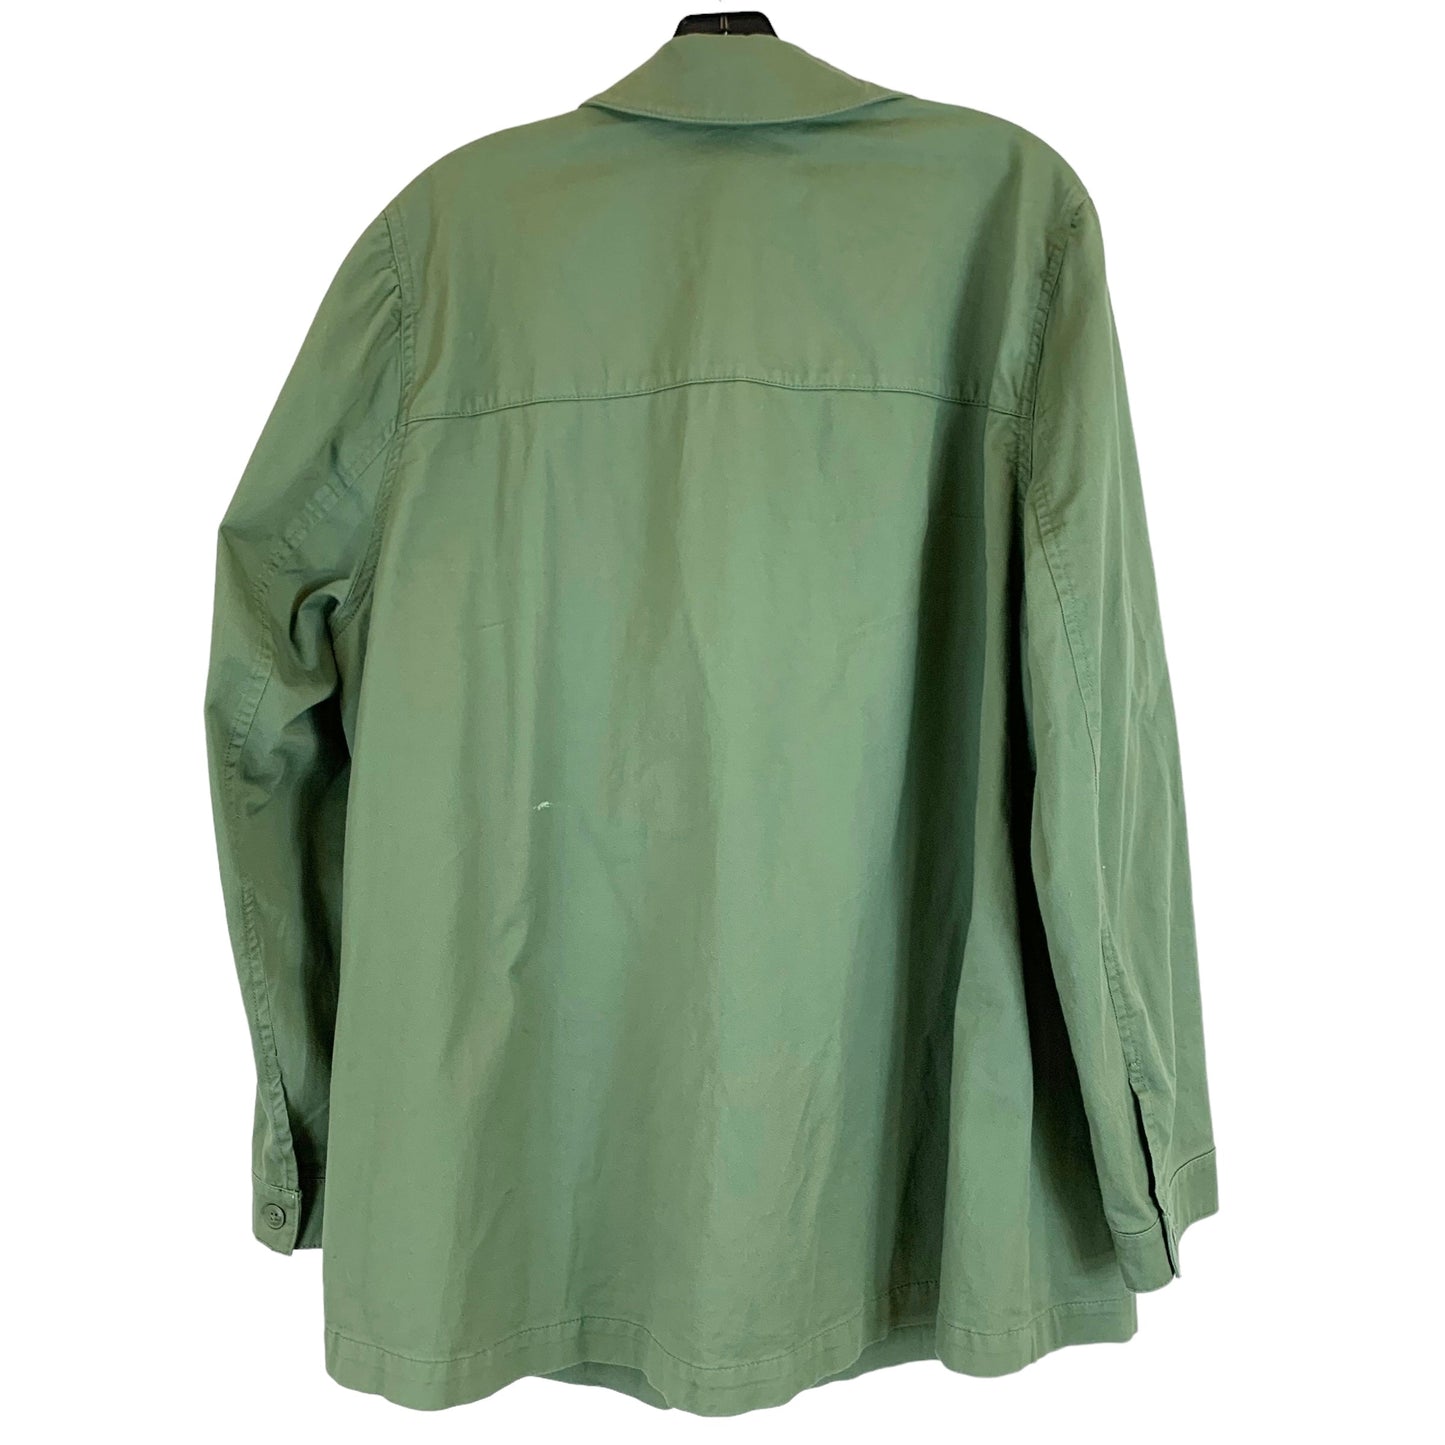 Green Jacket Shirt Lane Bryant, Size 2x